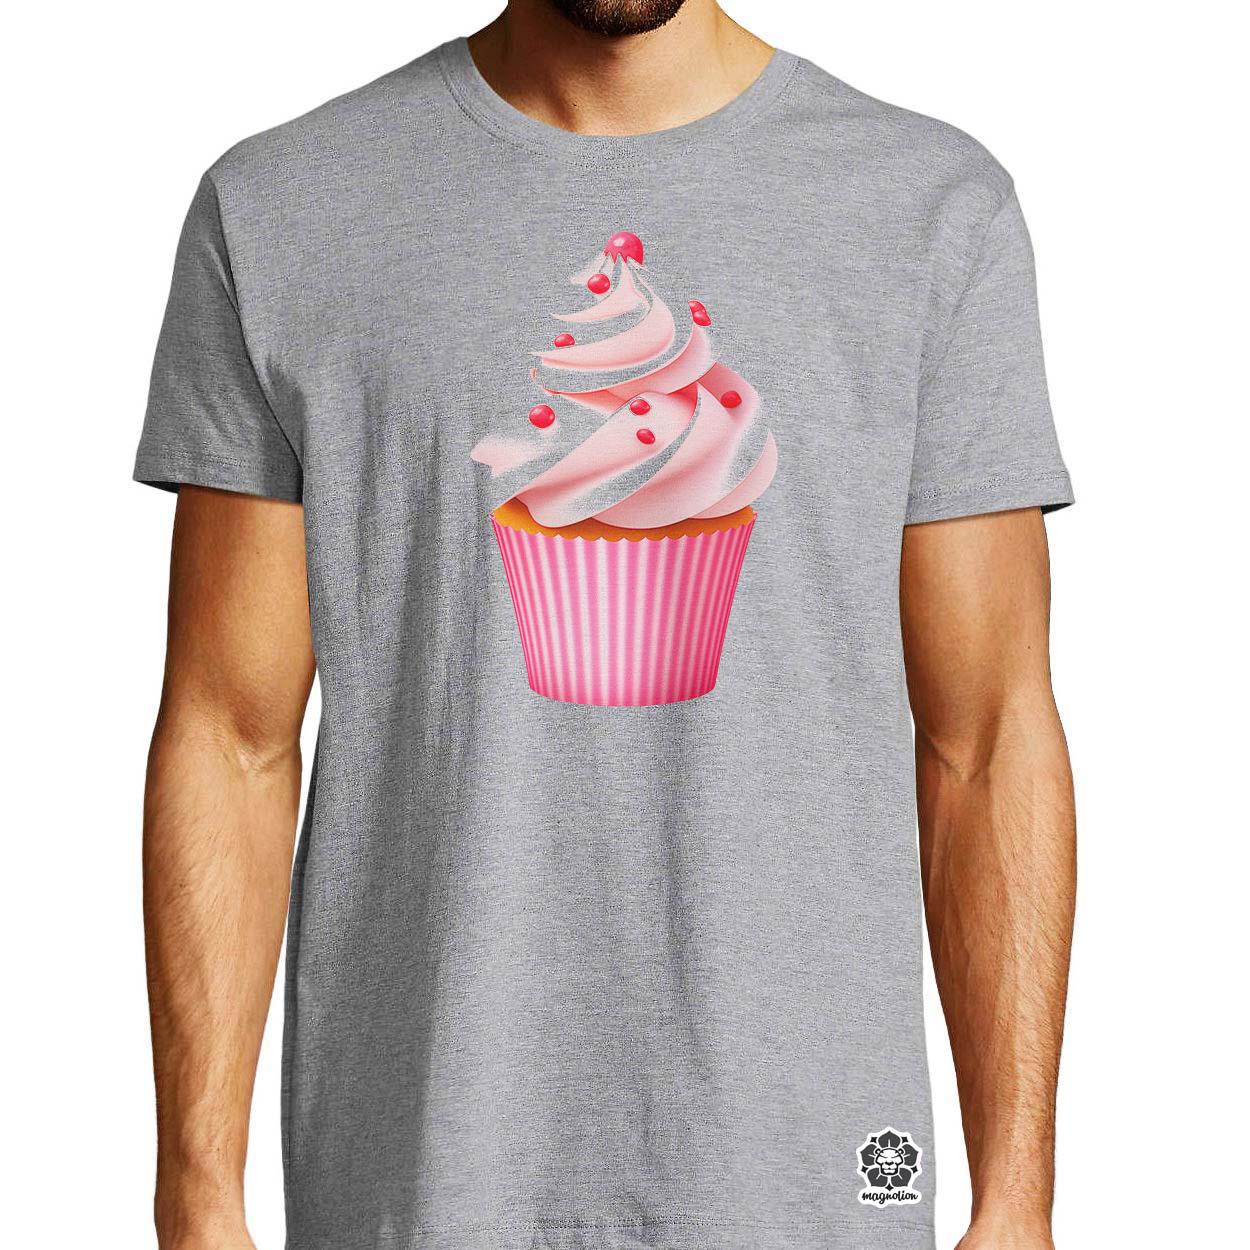 Cupcake v3